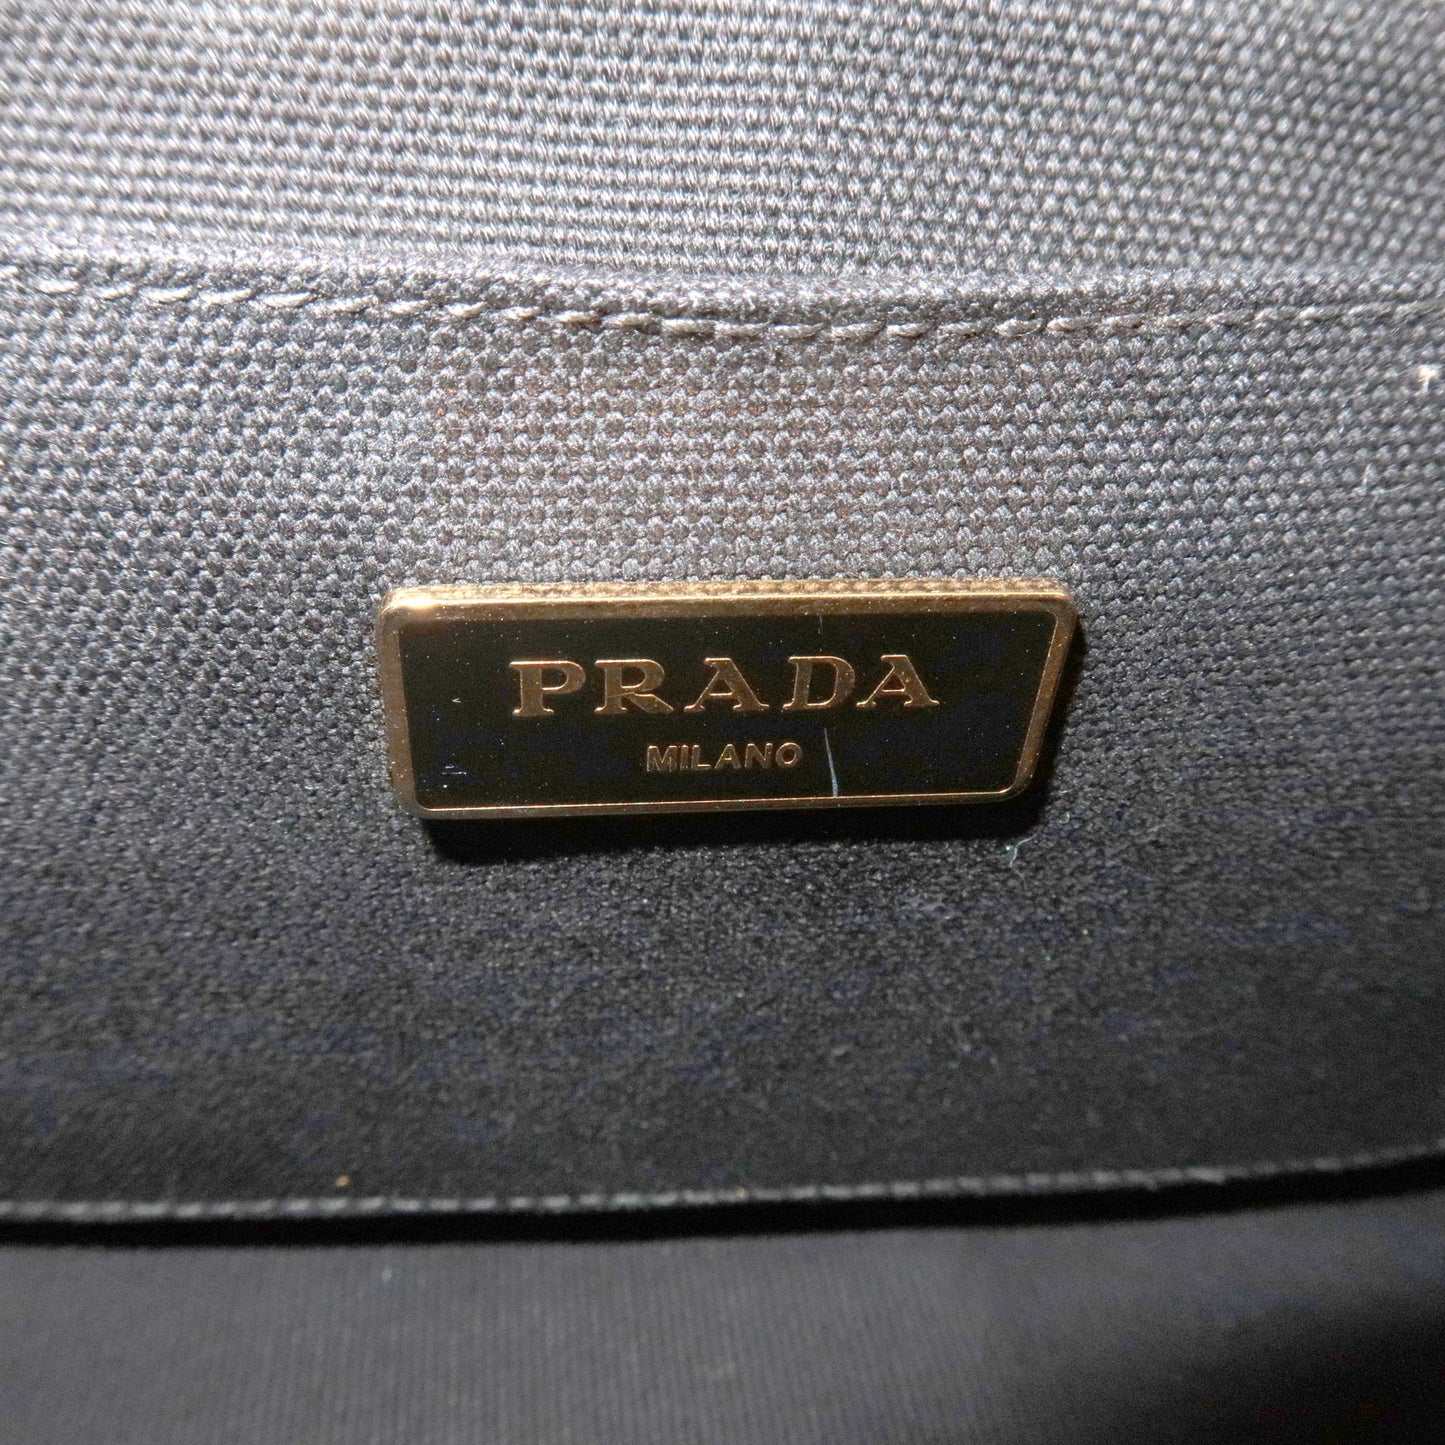 PRADA Logo Canapa Canvas Tote Bag Hand Bag Black BN1877